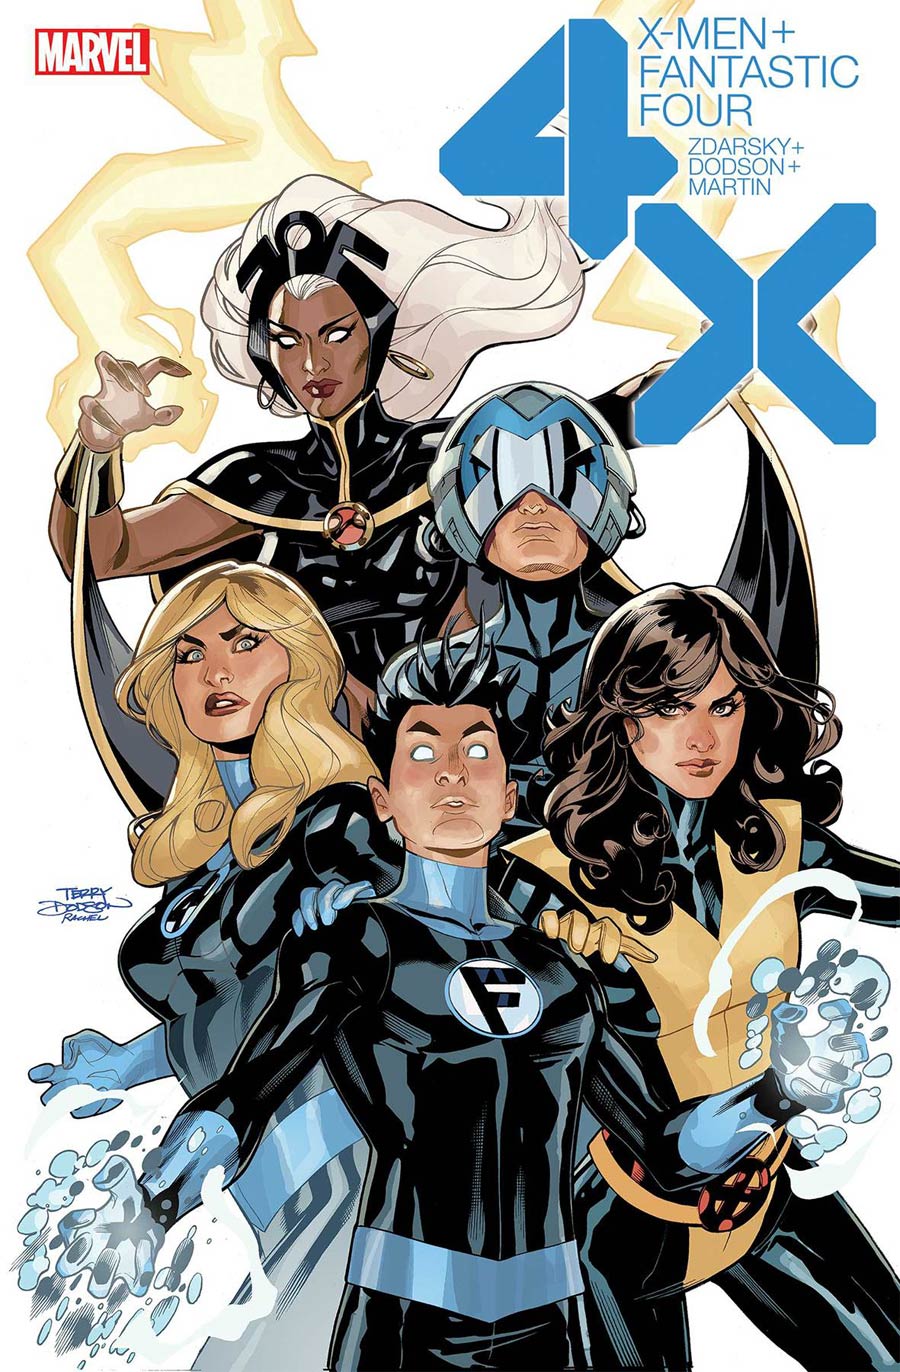 X-Men Fantastic Four Vol 2 #1 By Terry Dodson Poster